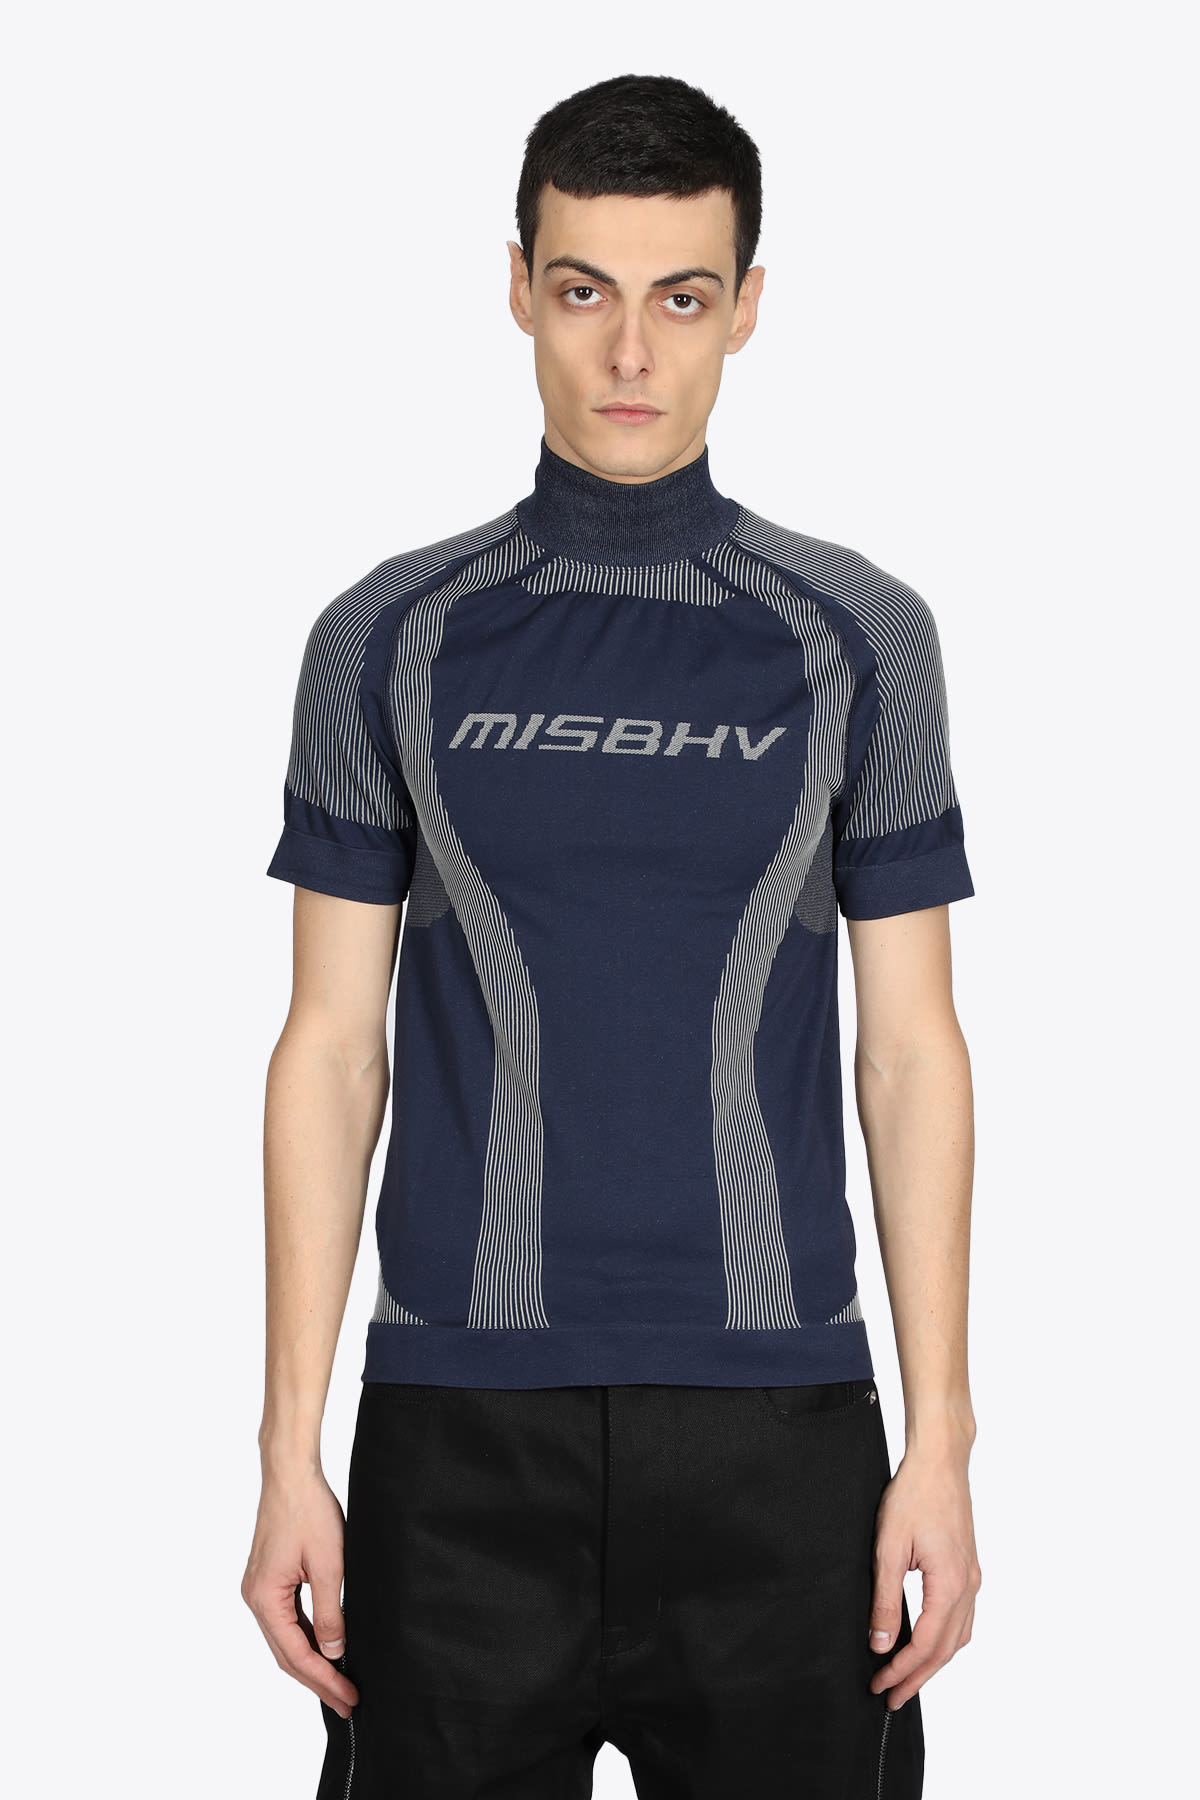 MISBHV Sport Active Classic T-shirt Blue lycra active t-shirt with logo - Sport active classic